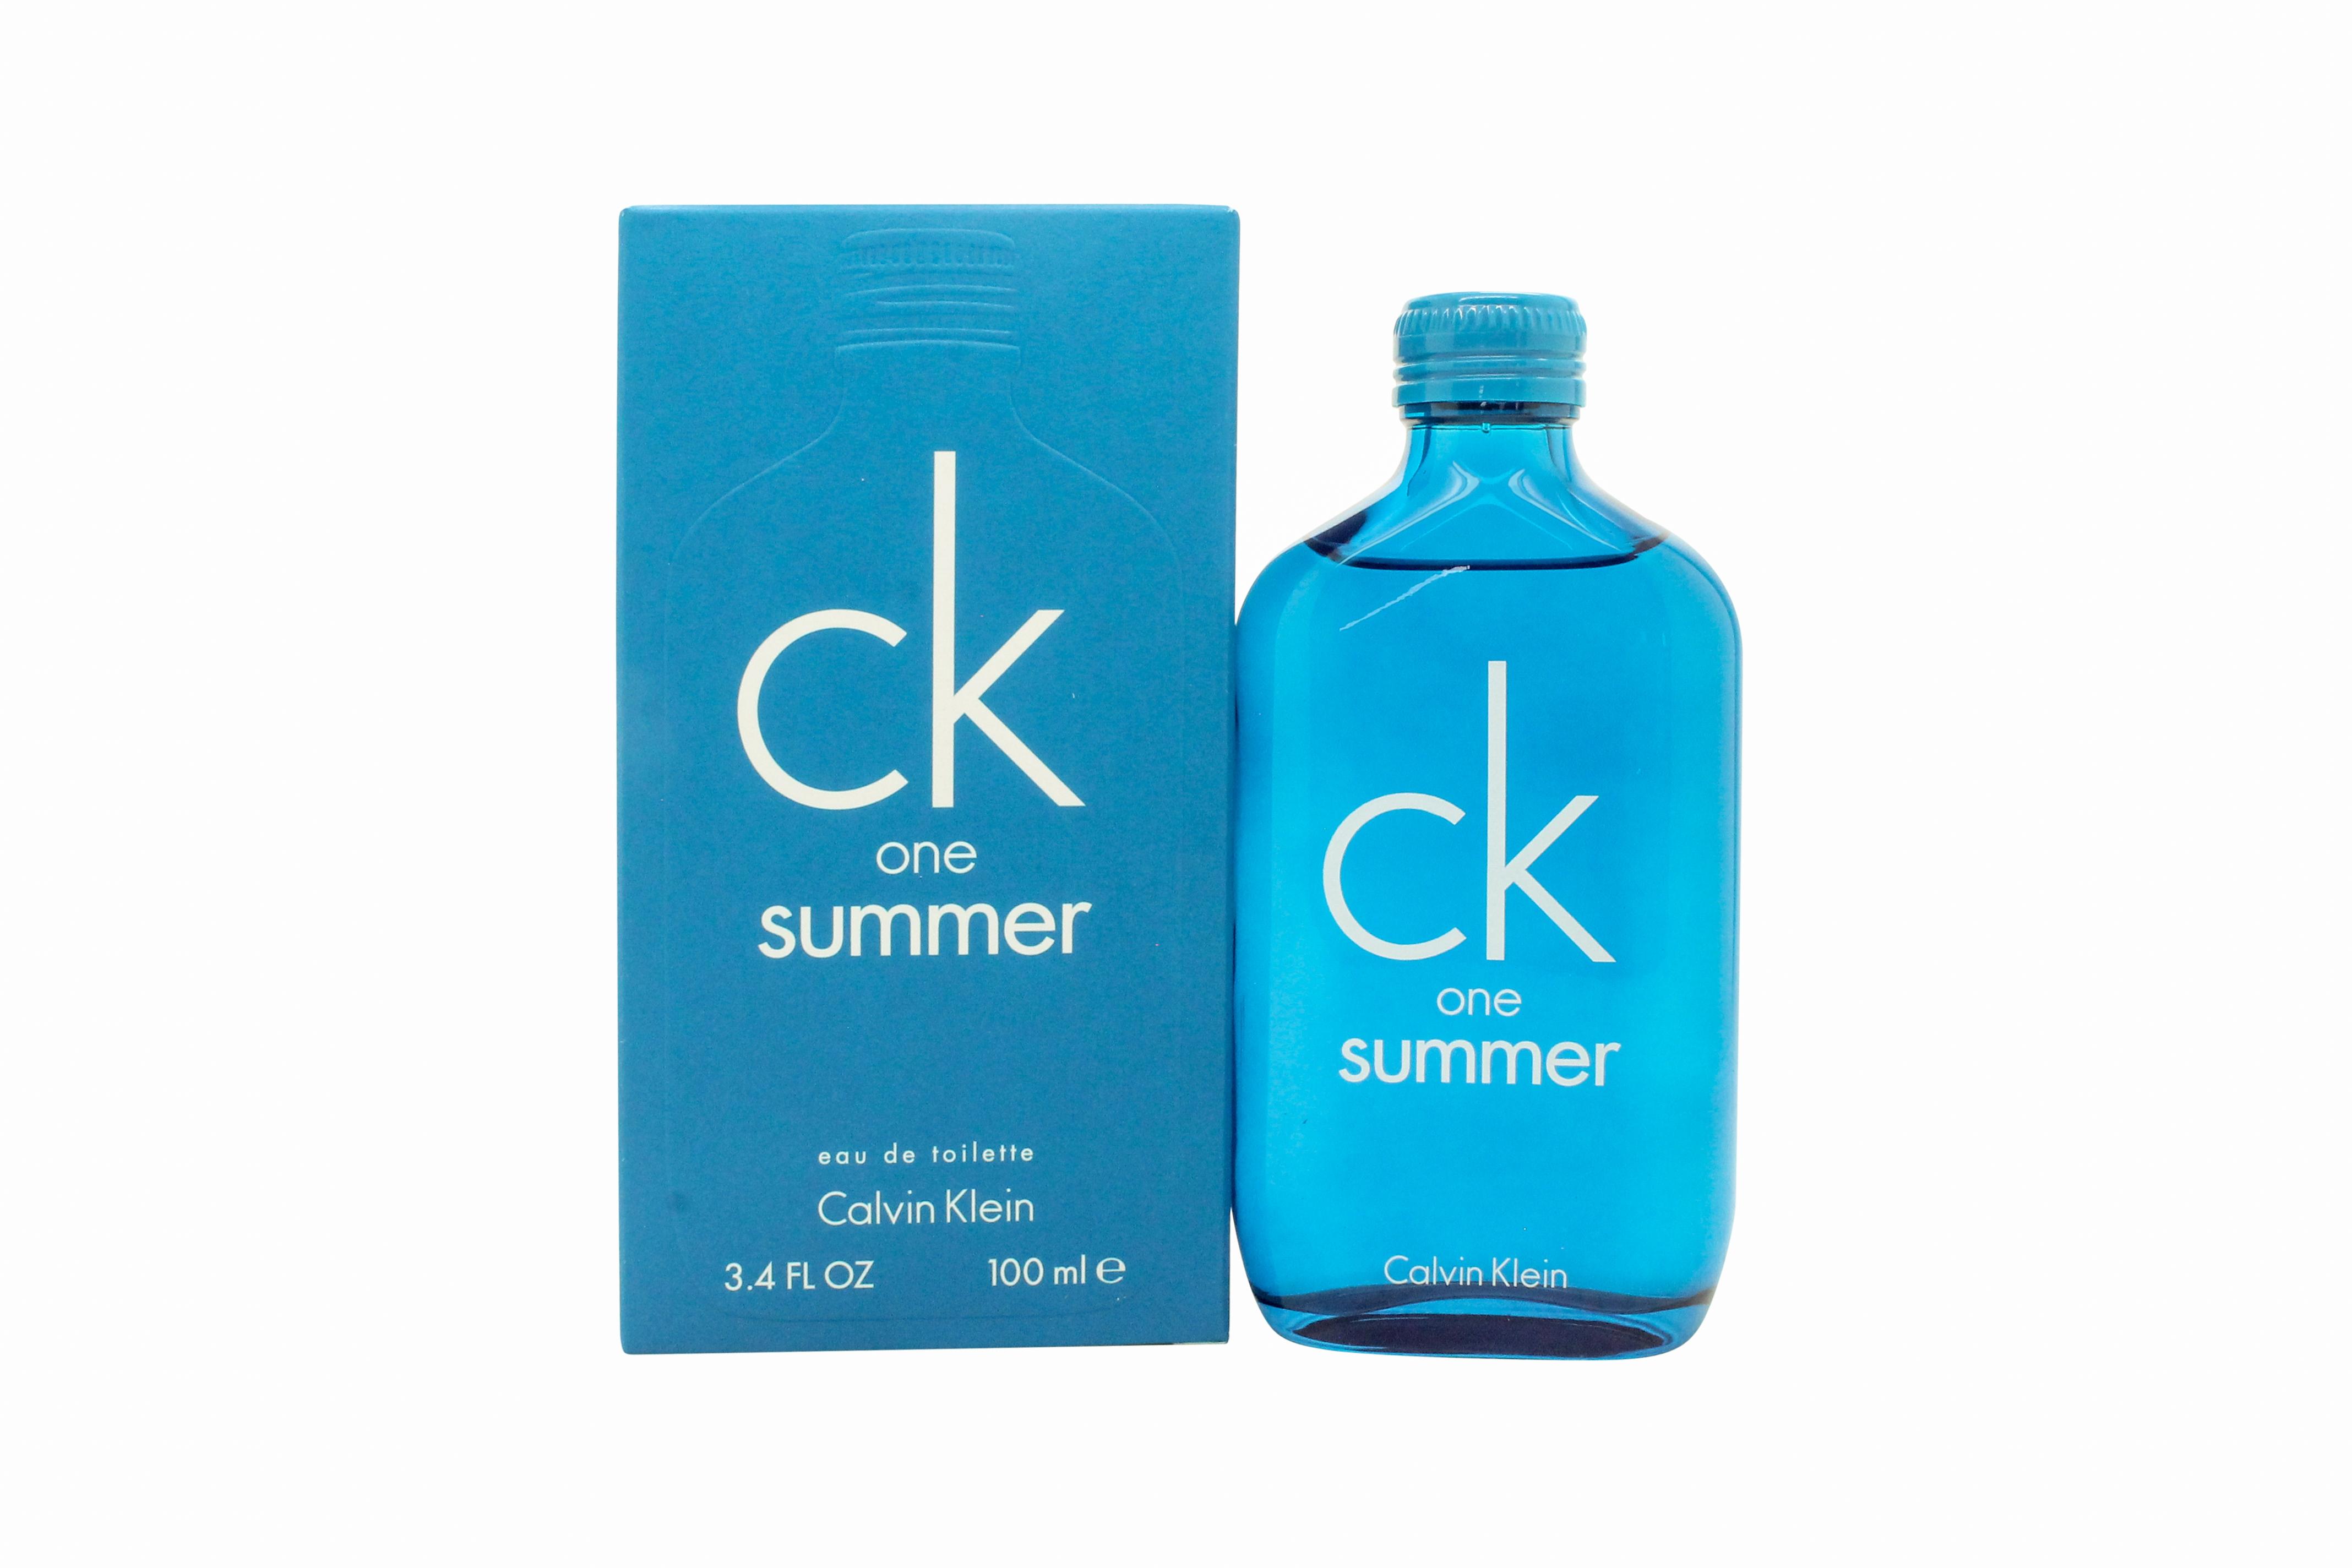 Calvin Klein CK One Summer 2018 Eau de Toilette 100ml Spray